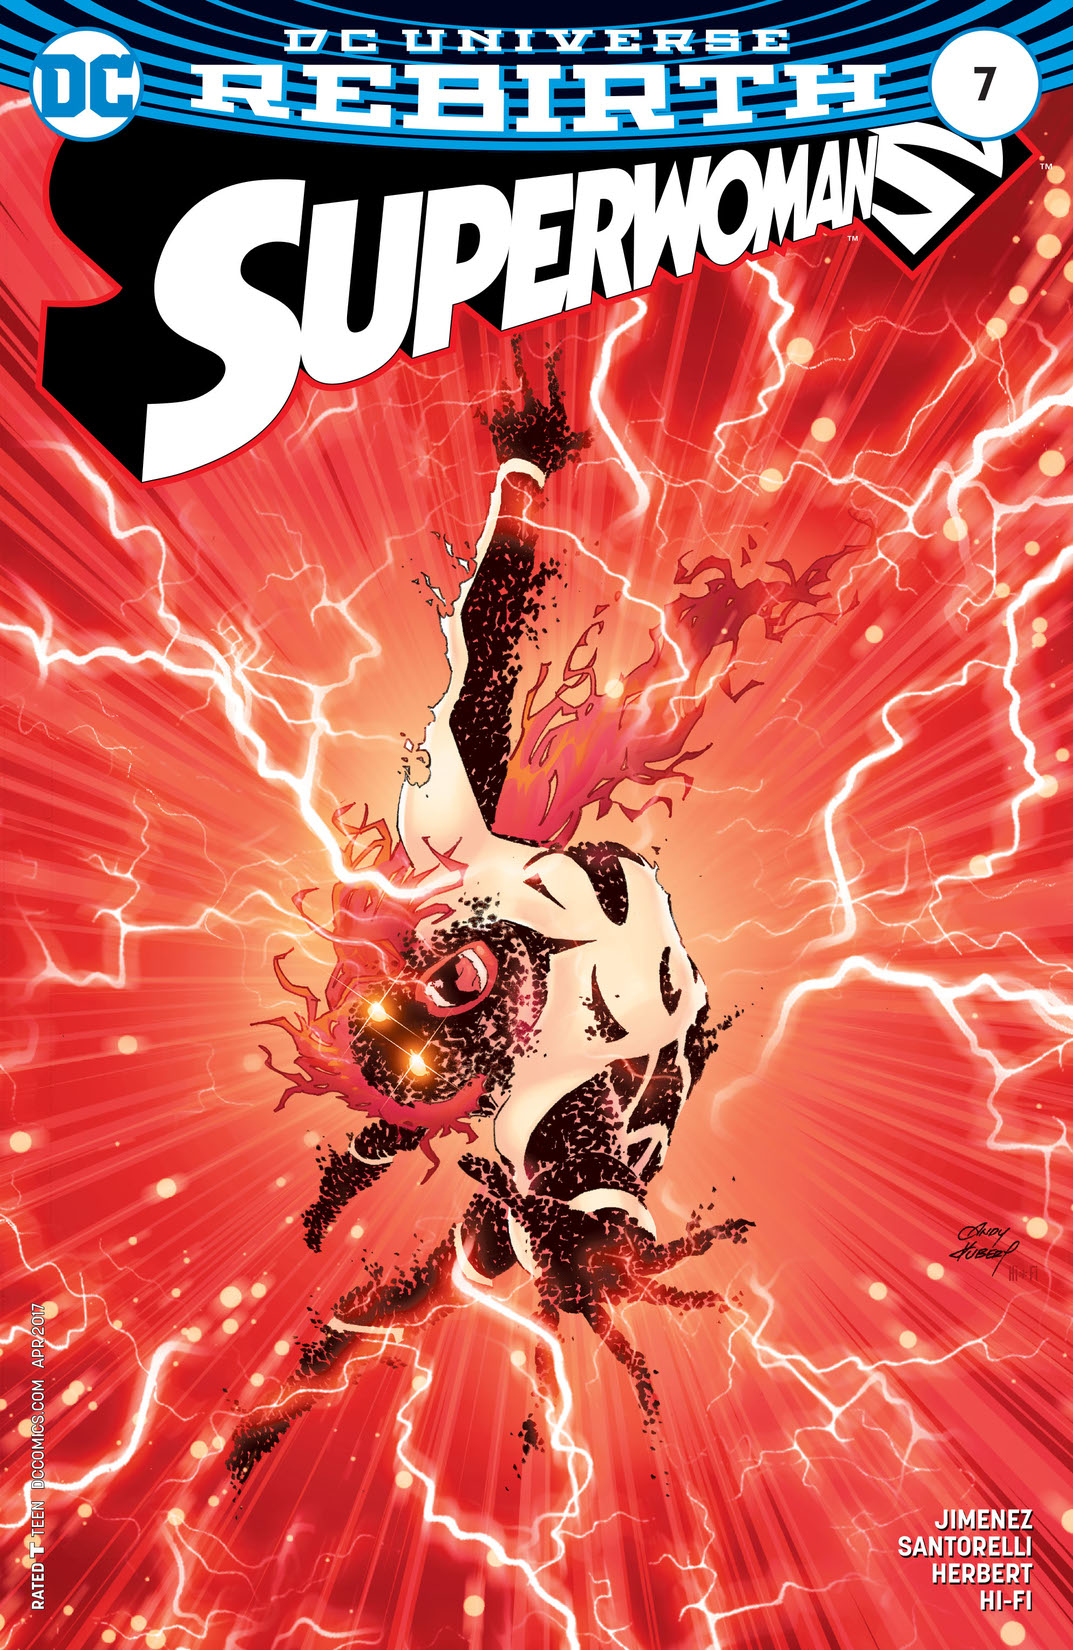 Superwoman #7 preview images